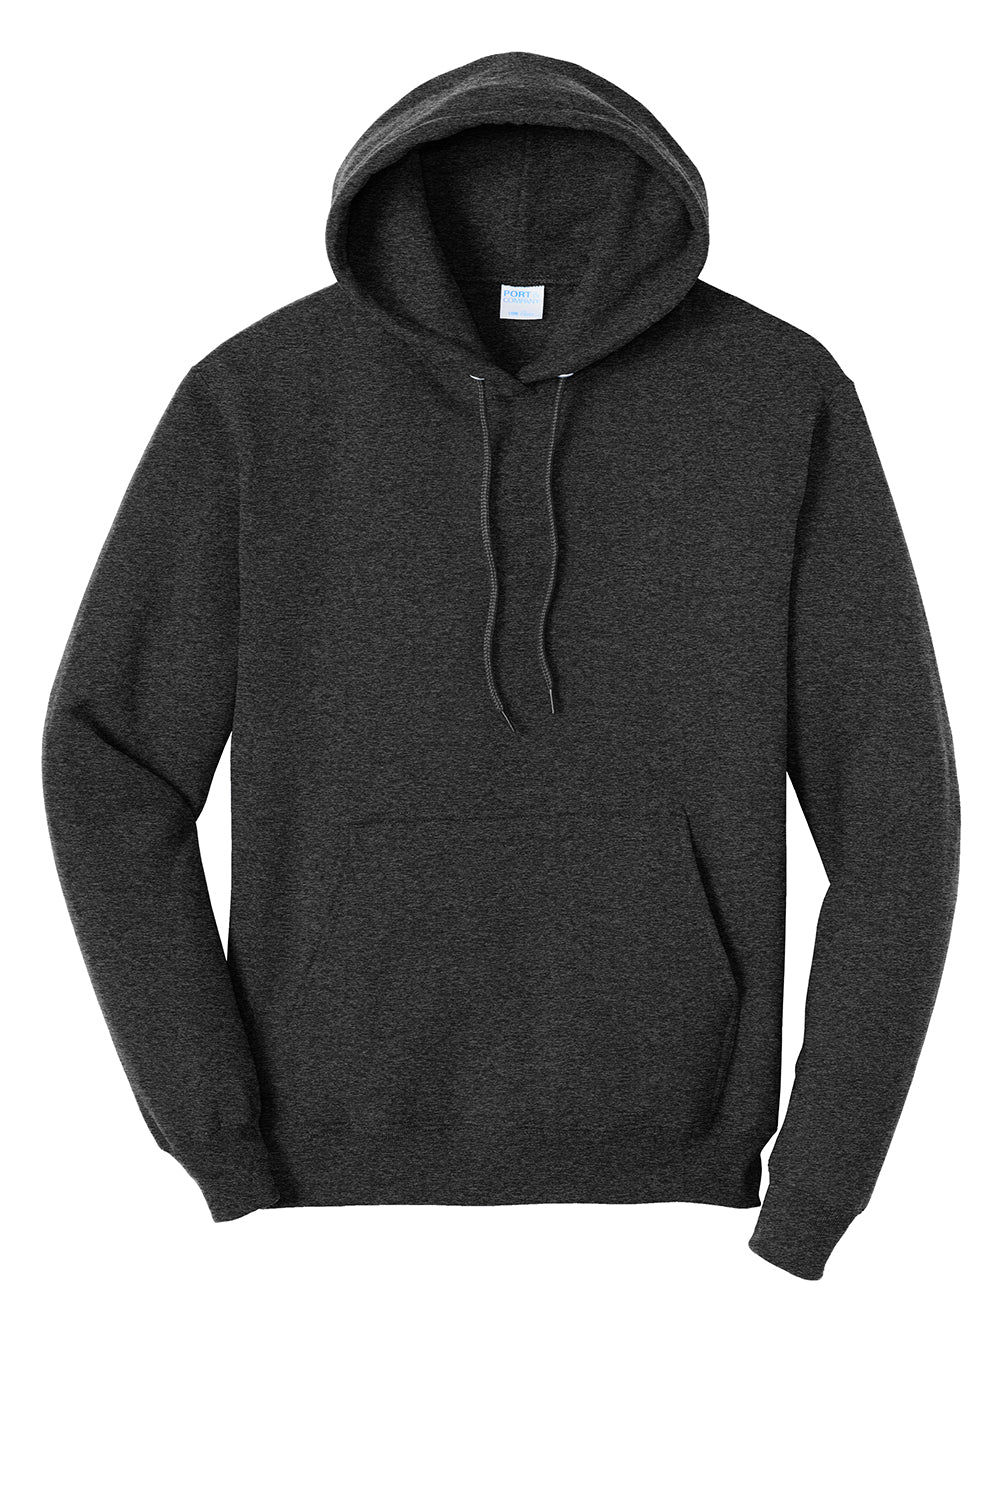 Port & Company PC78H/PC78HT Mens Core Fleece Hooded Sweatshirt Hoodie Heather Black Flat Front